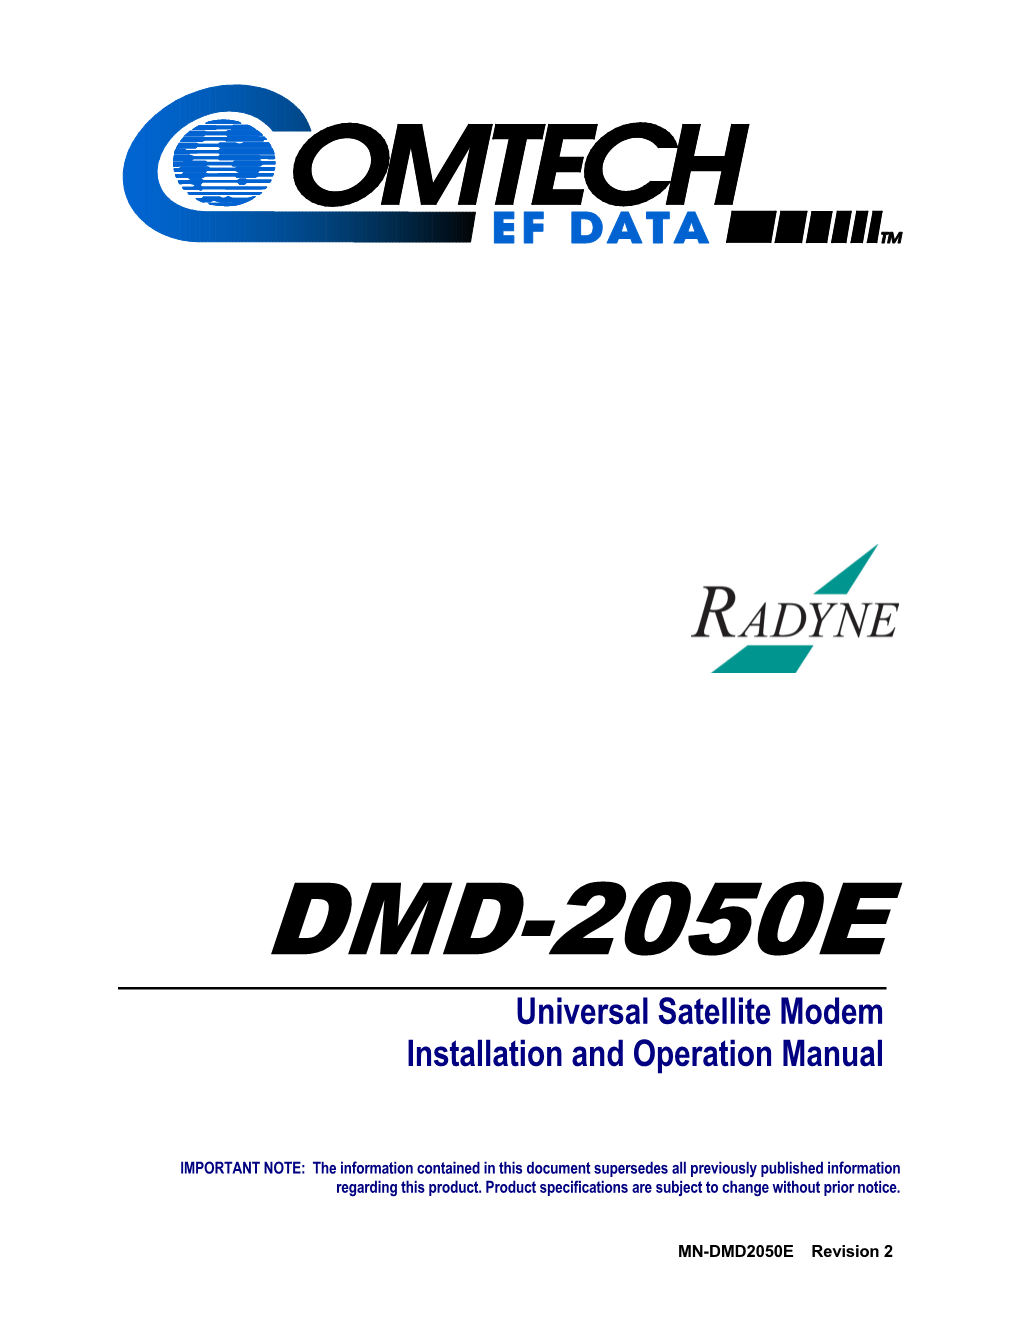 DMD-2050E Universal Satellite Modem Installation and Operation Manual